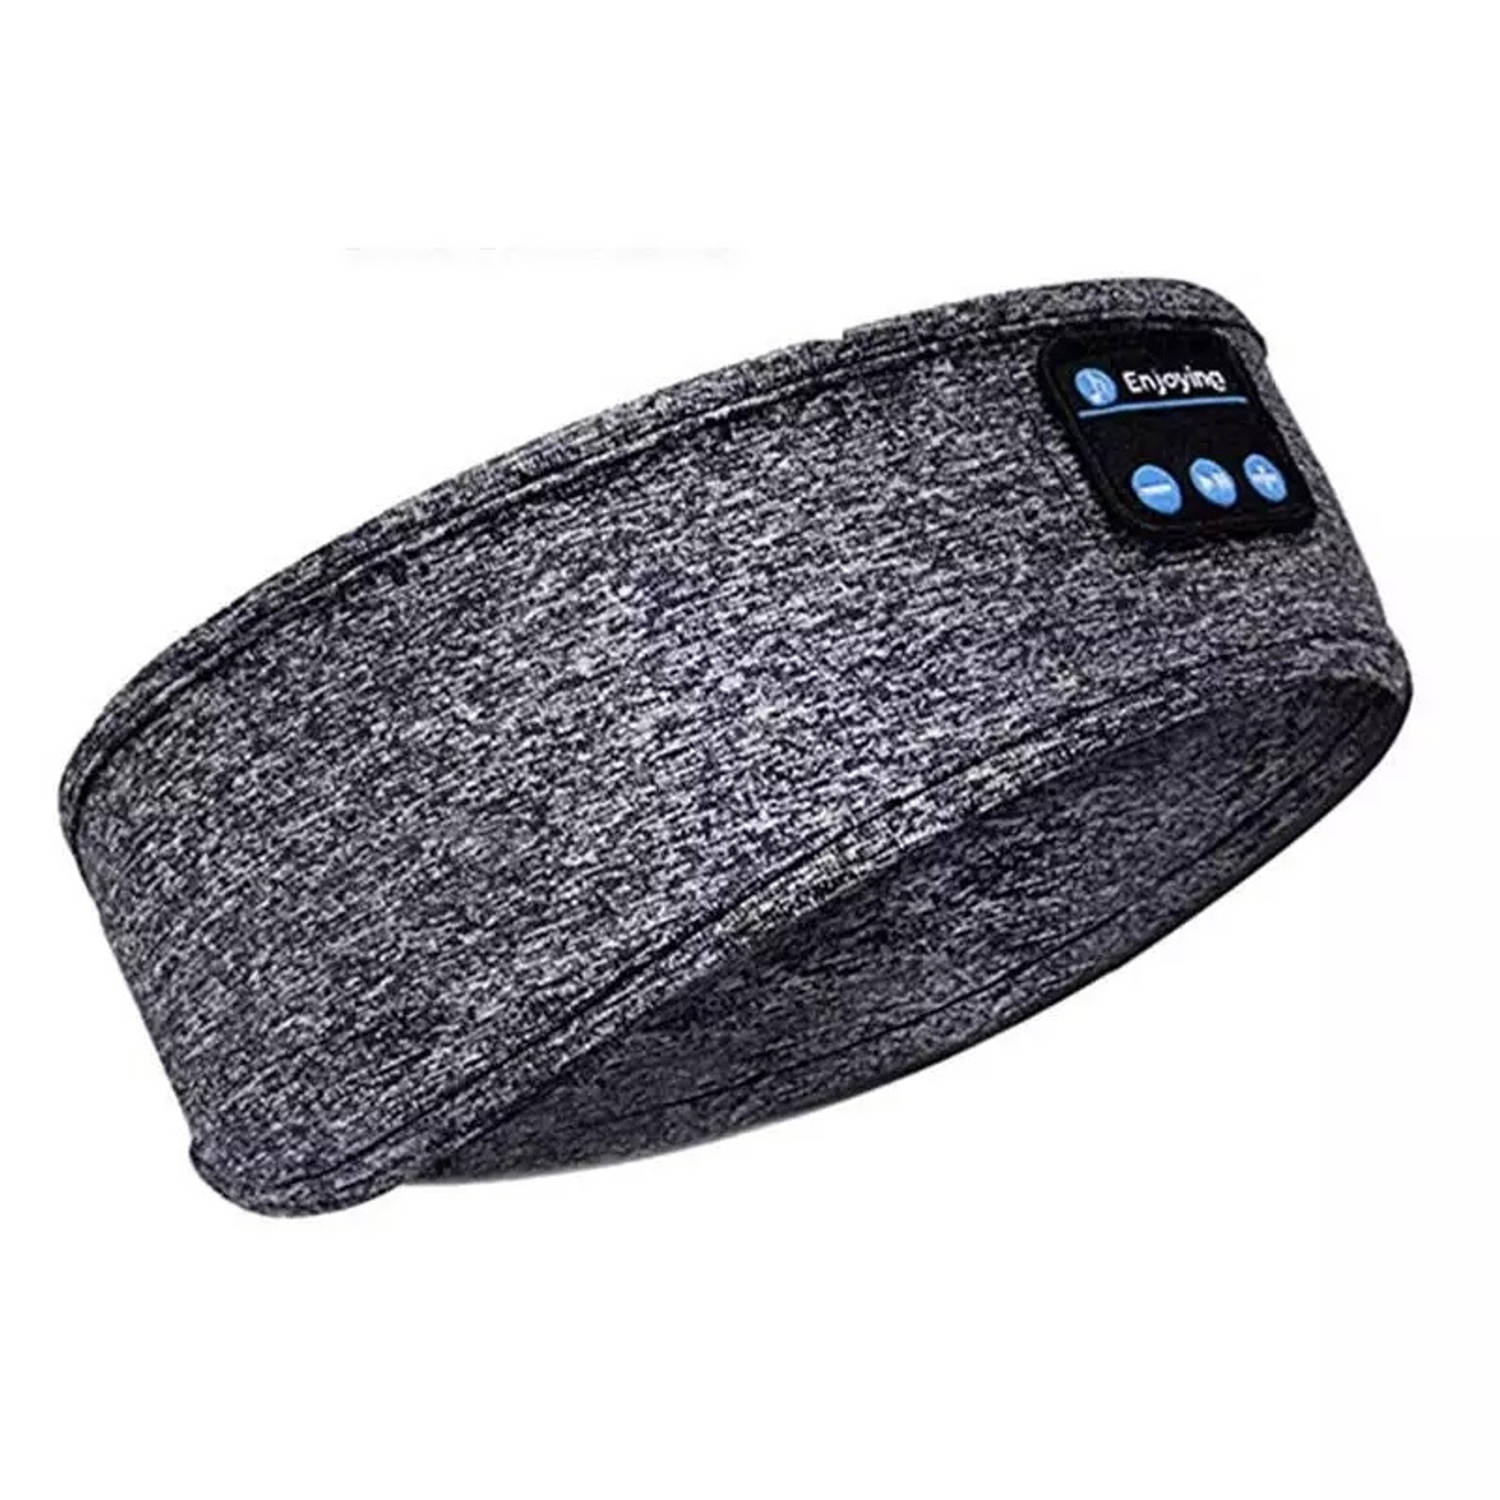 Slaap Koptelefoon Draadloos - Slaapmasker Bluetooth - Luidspreker - Oplaadbaar via USB - Grijs